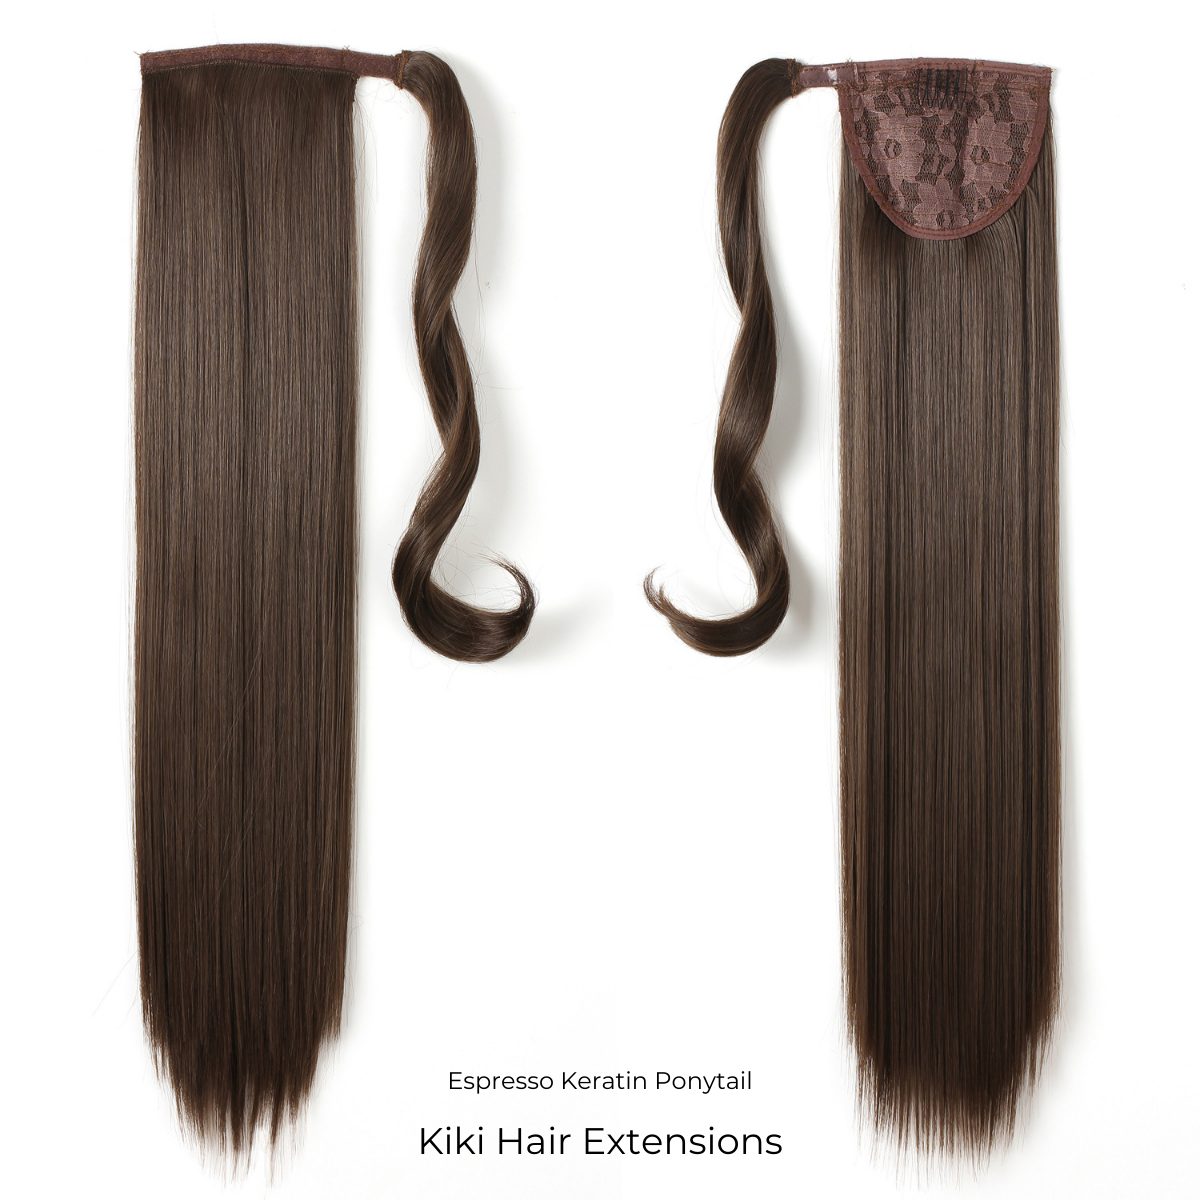 Keratin Synthetic Ponytail Hair Extensions 100g - Kiki Hair Extensions